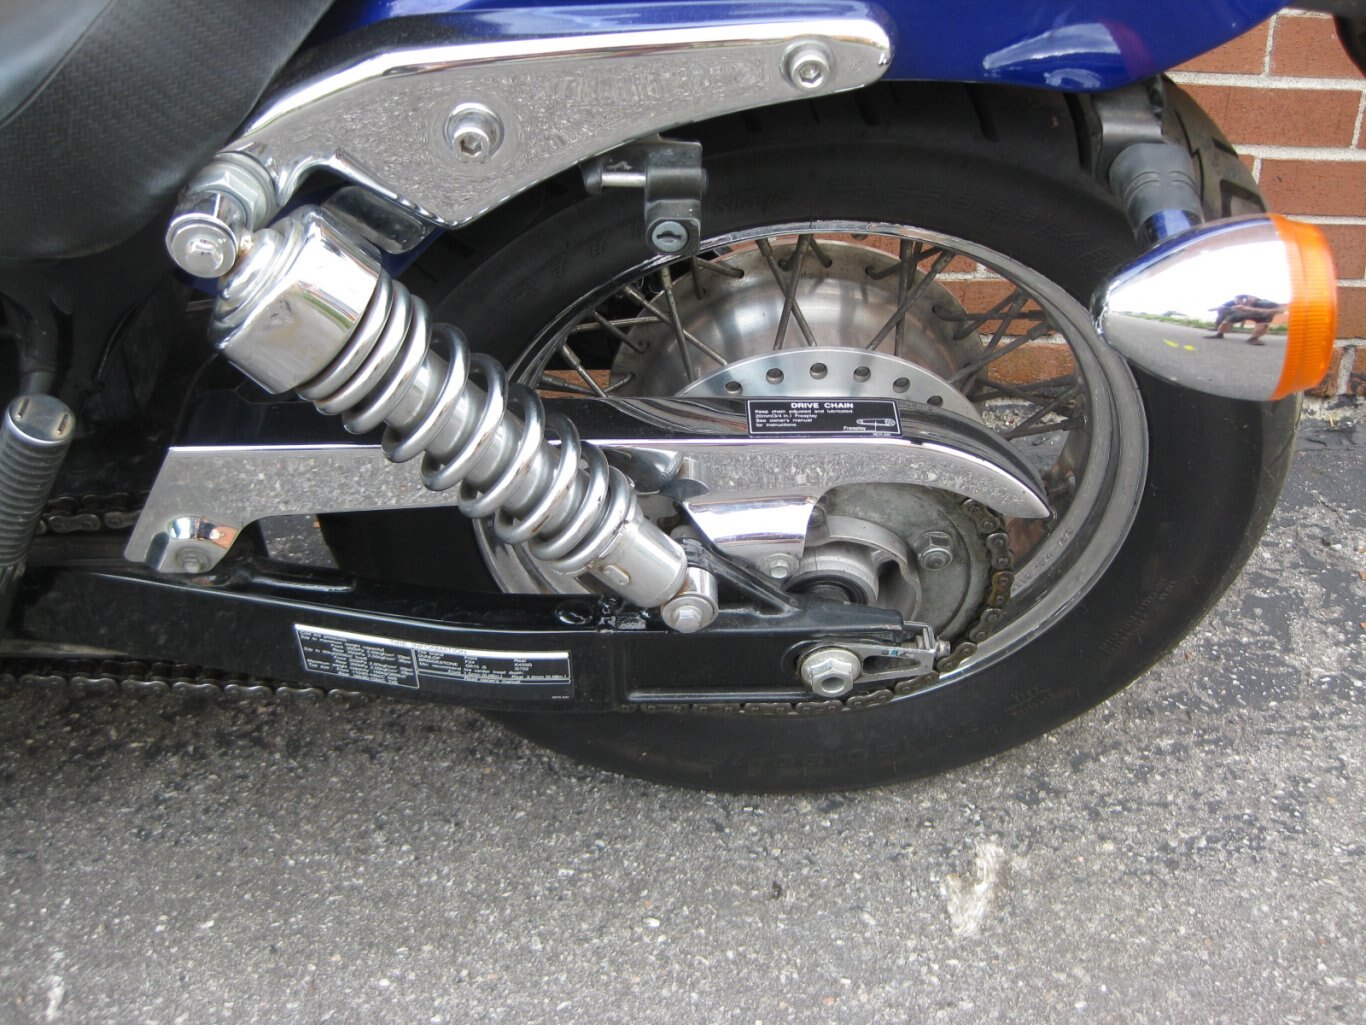 2005 Honda VT750 Spirt